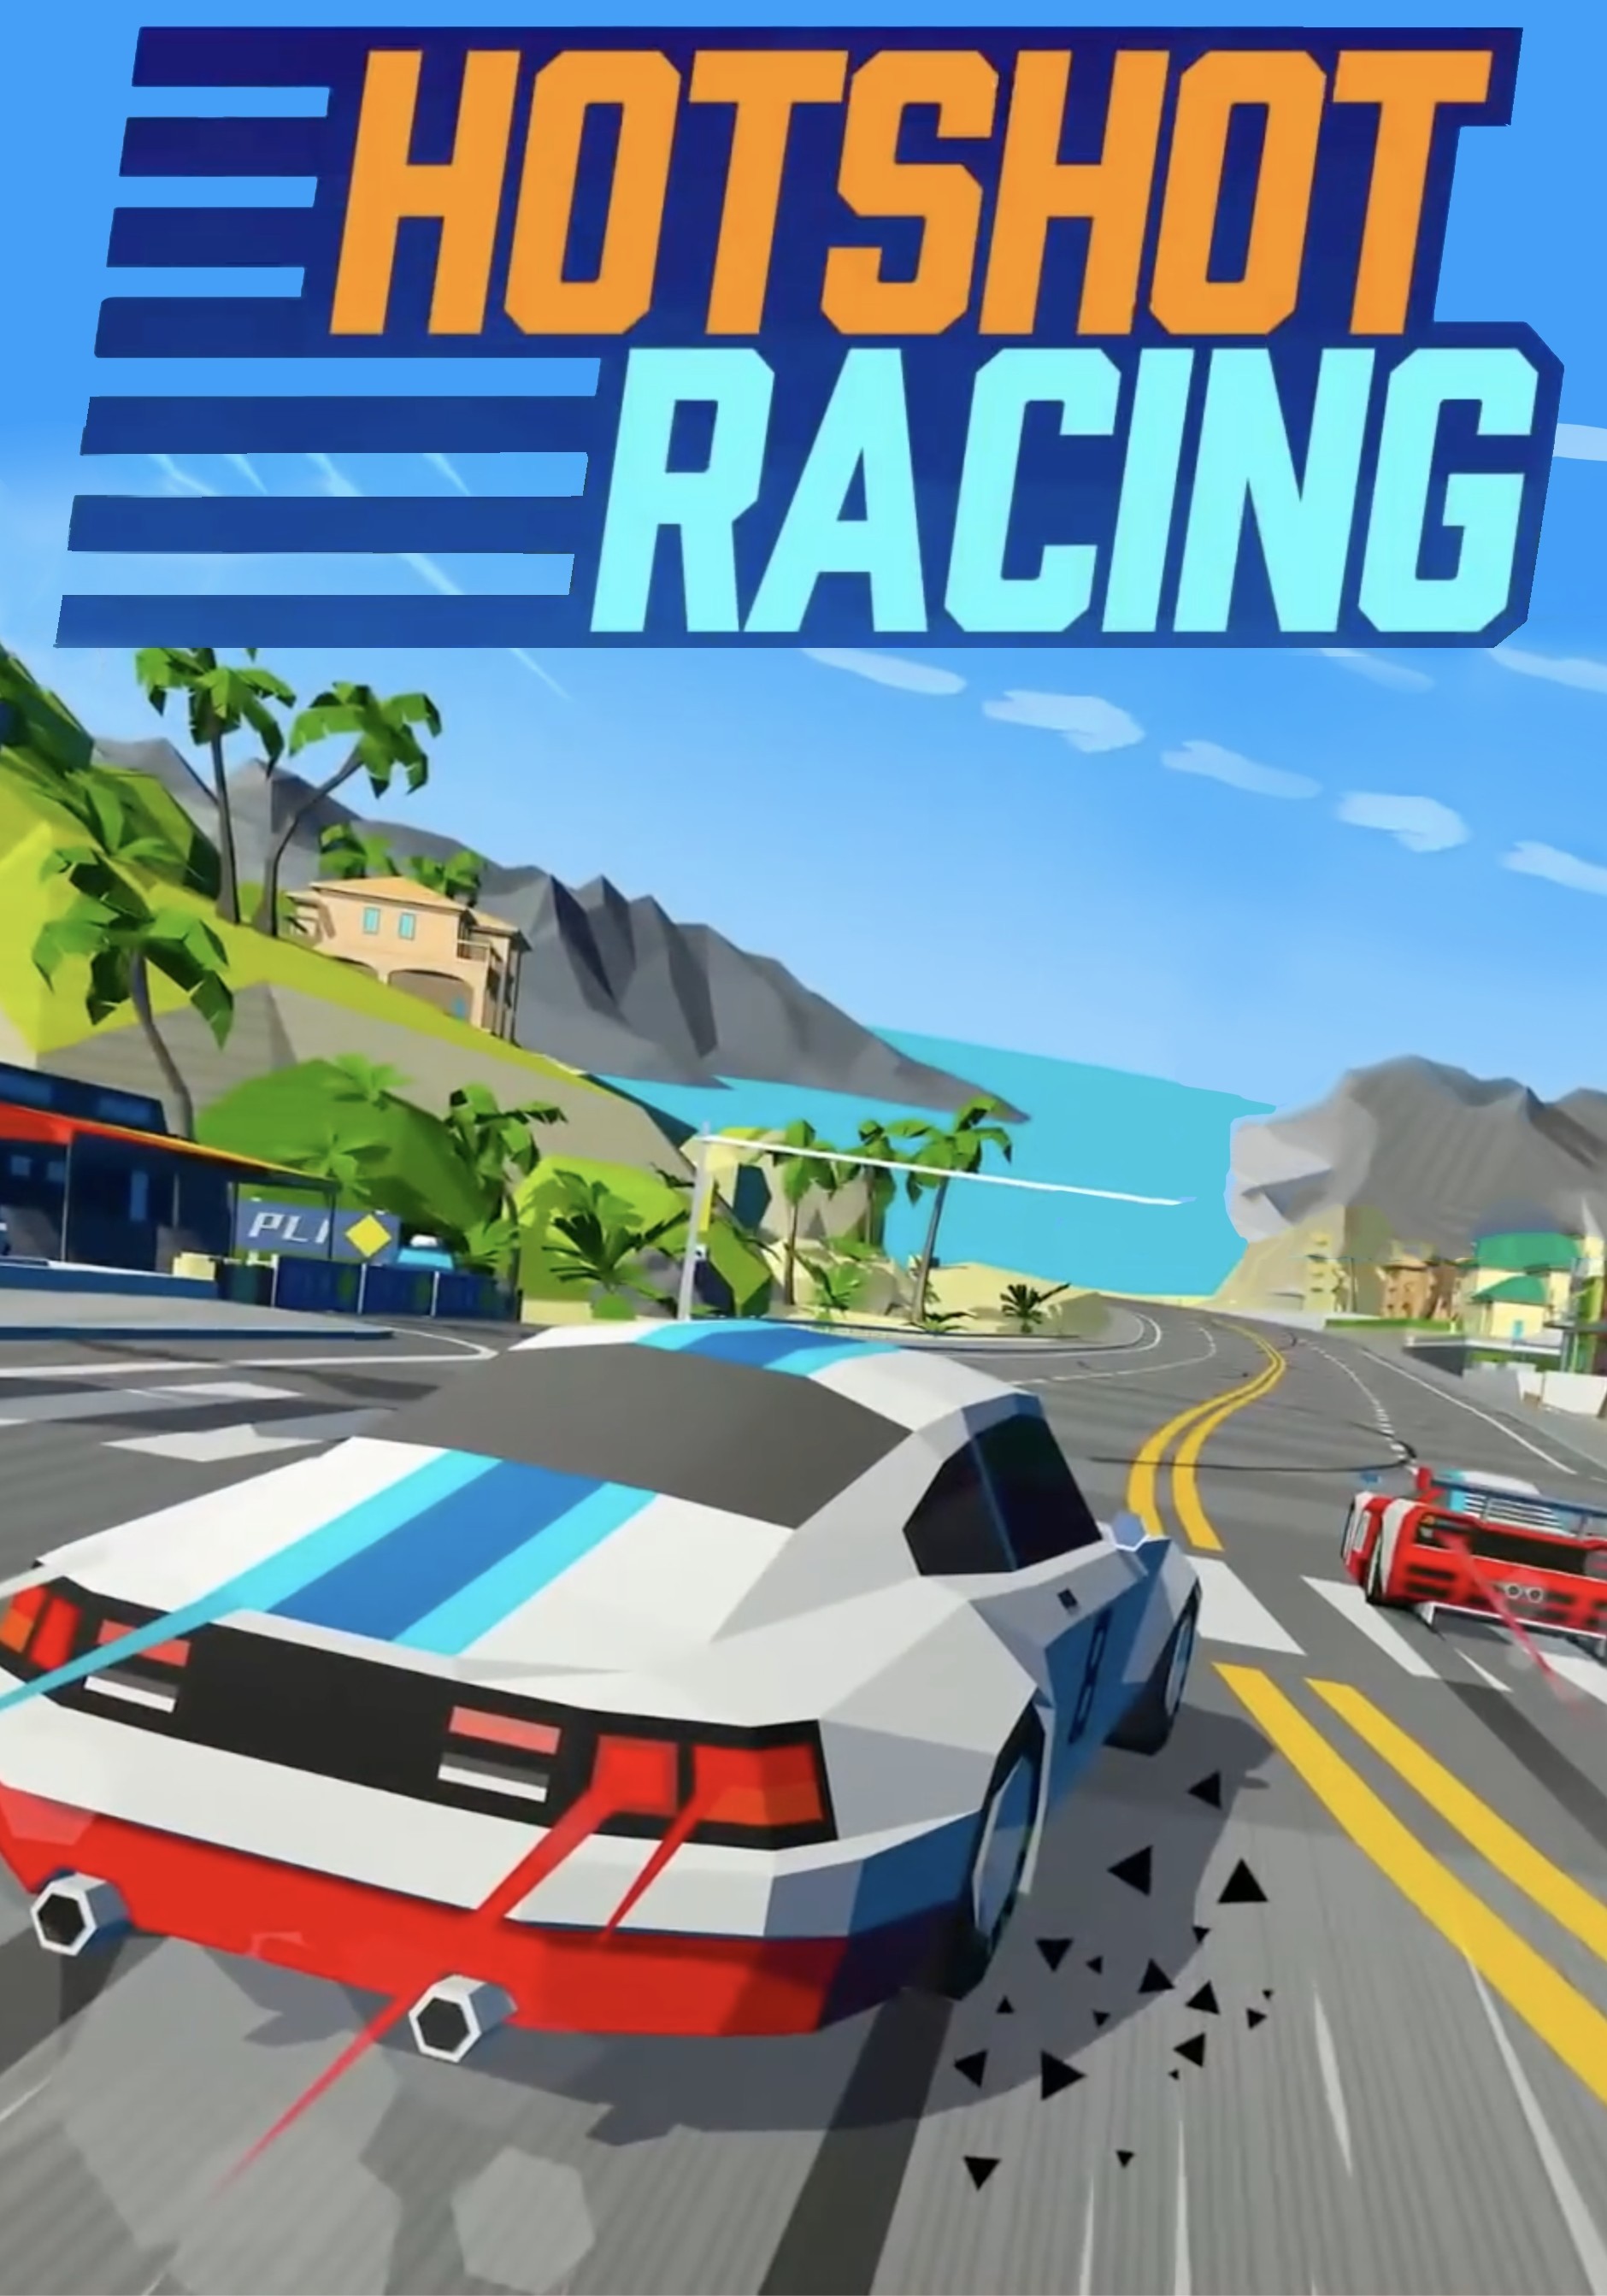 download hotshot racing for free